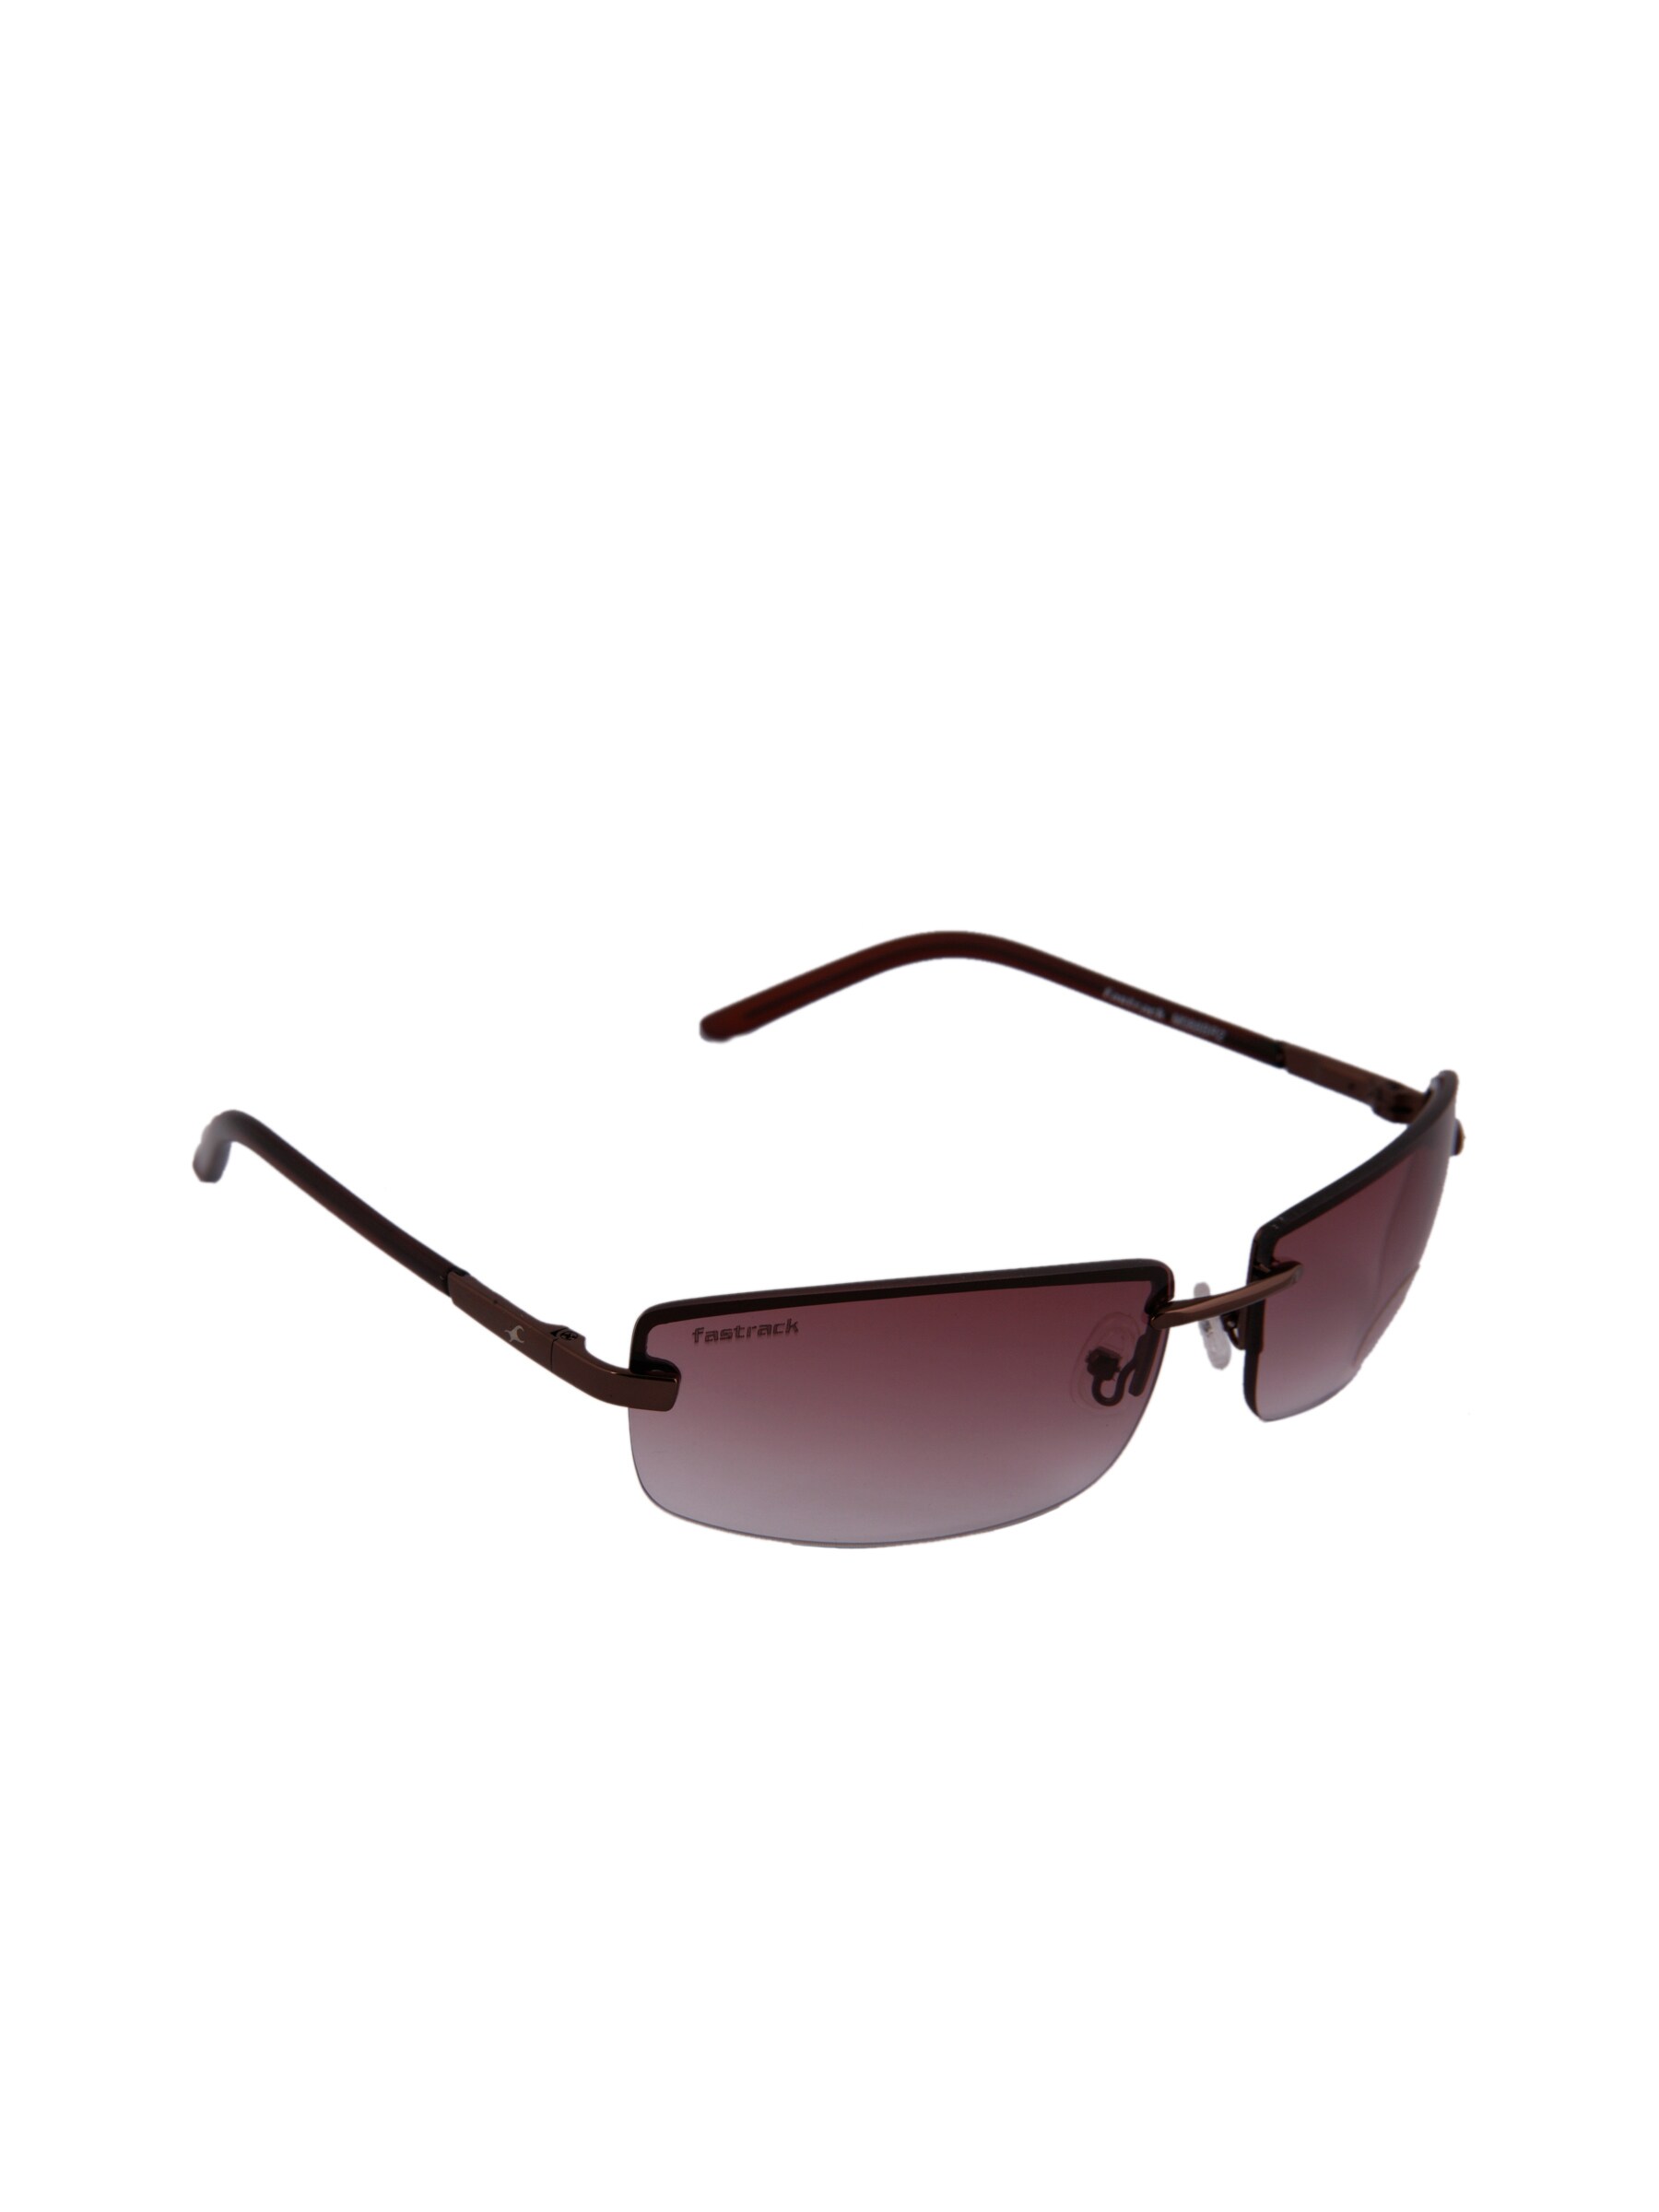 Fastrack Unisex New Pink Sunglasses